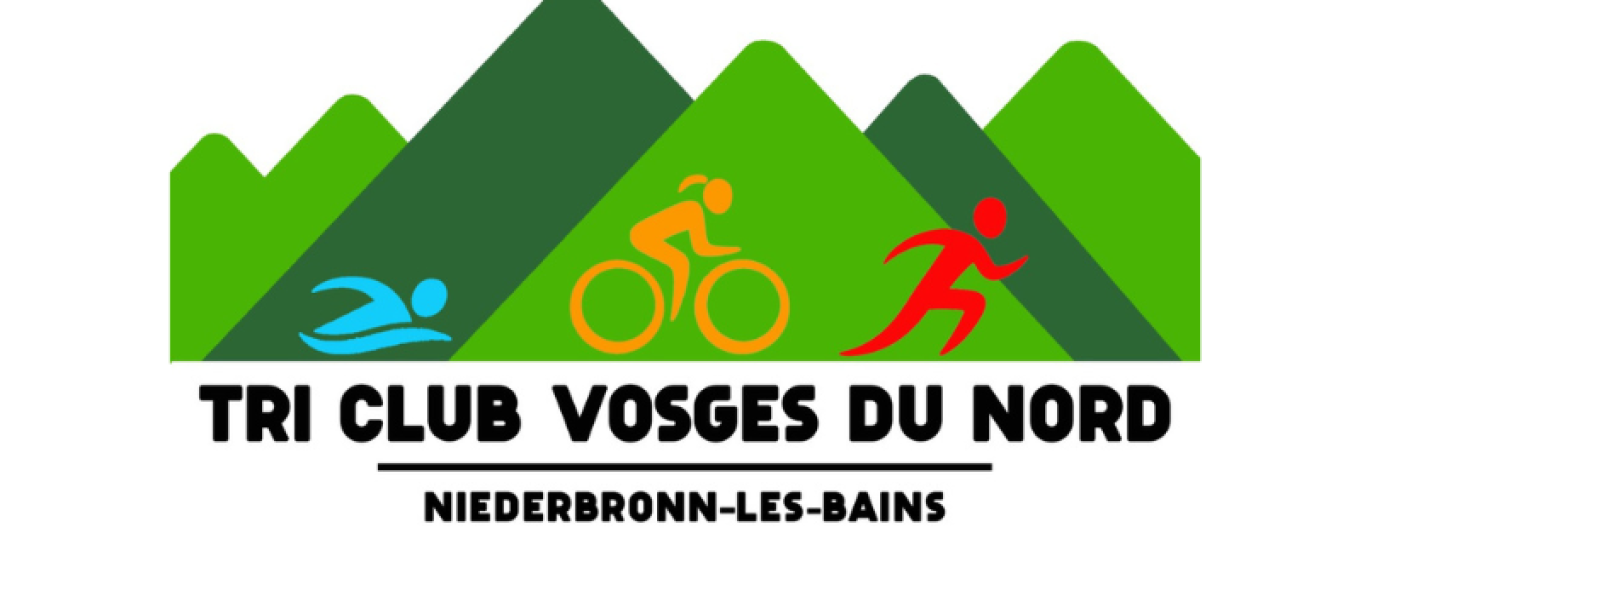 Tri club Vosges du Nord